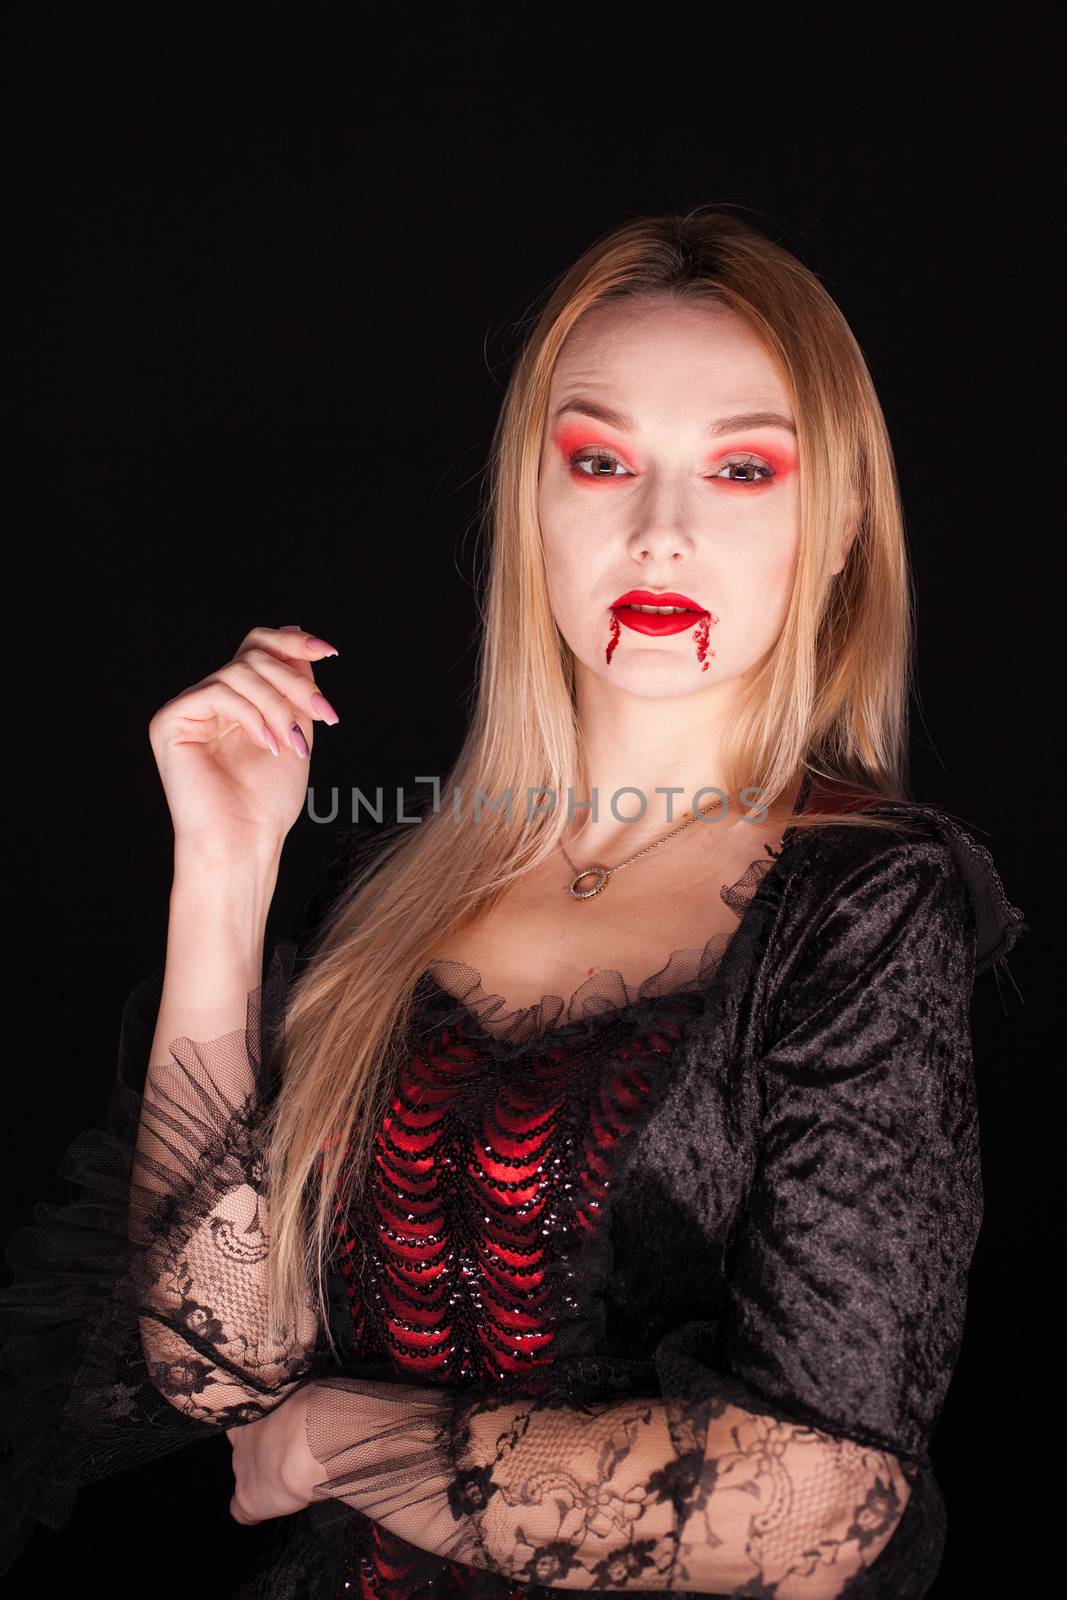 Caucasian girl dressed up like a vampire for halloween over black background.